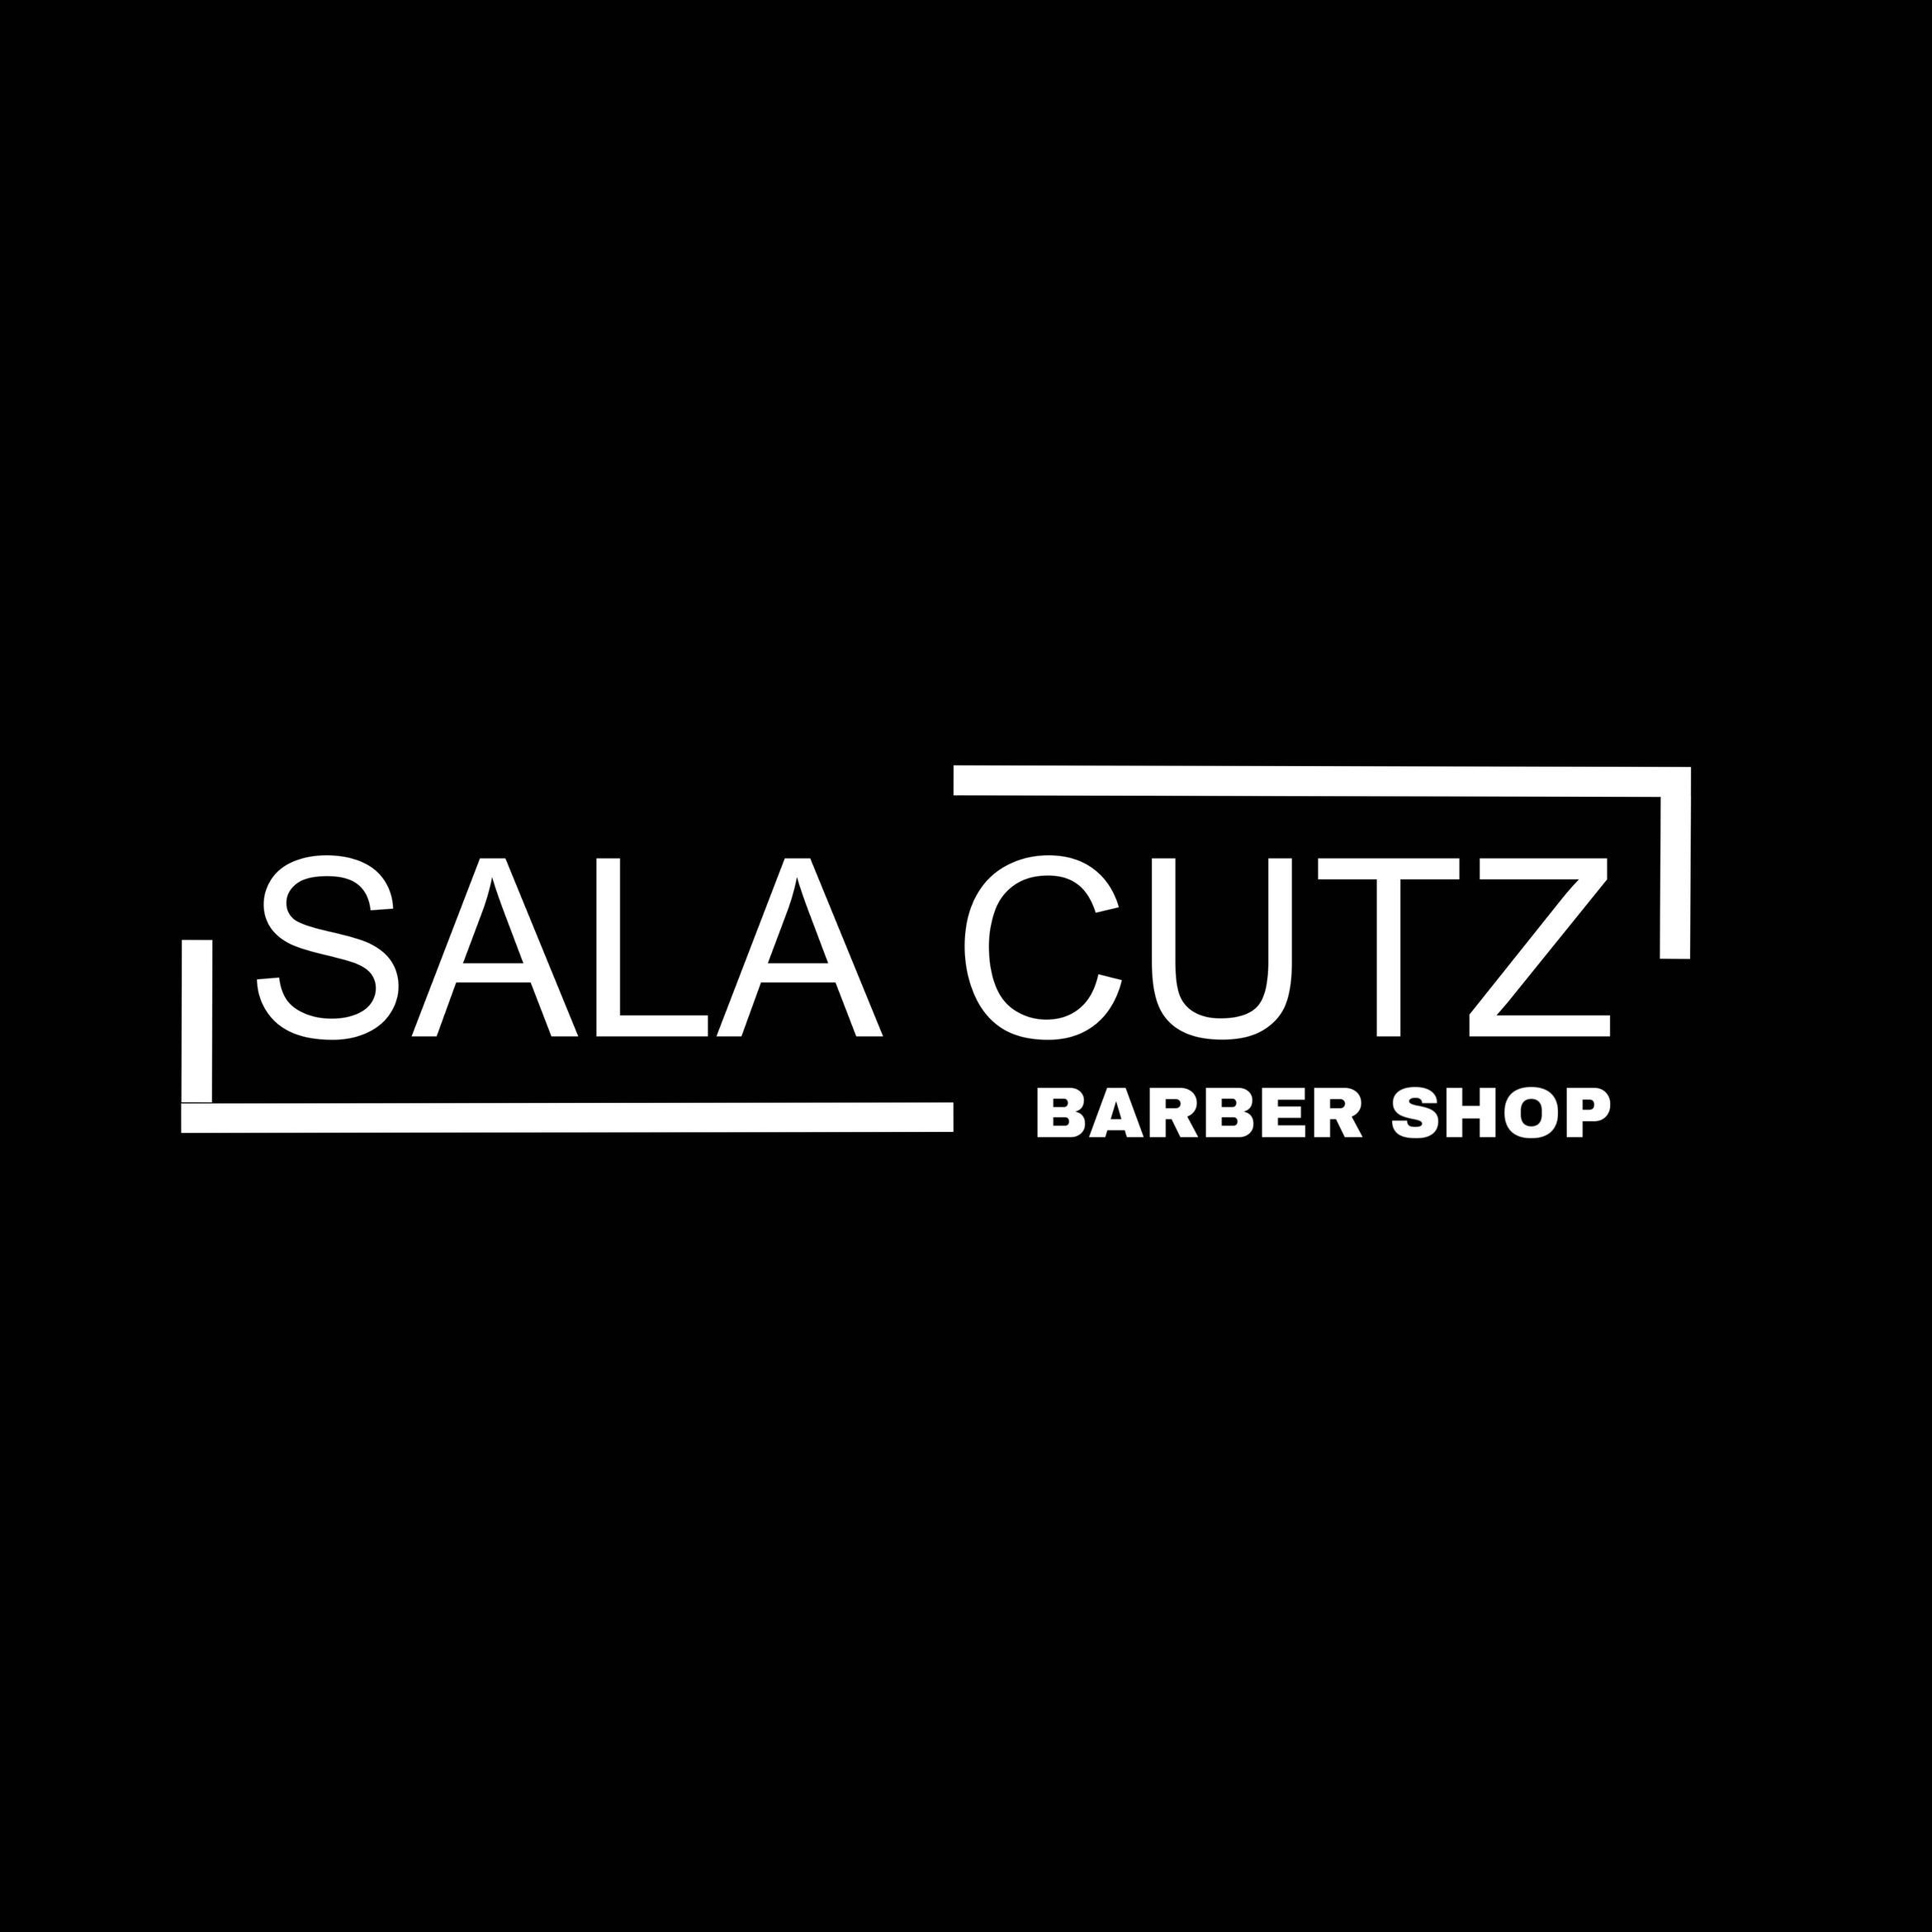 SALACUTZ barber shop, Avenida de Oviedo, 53, 33420, Siero